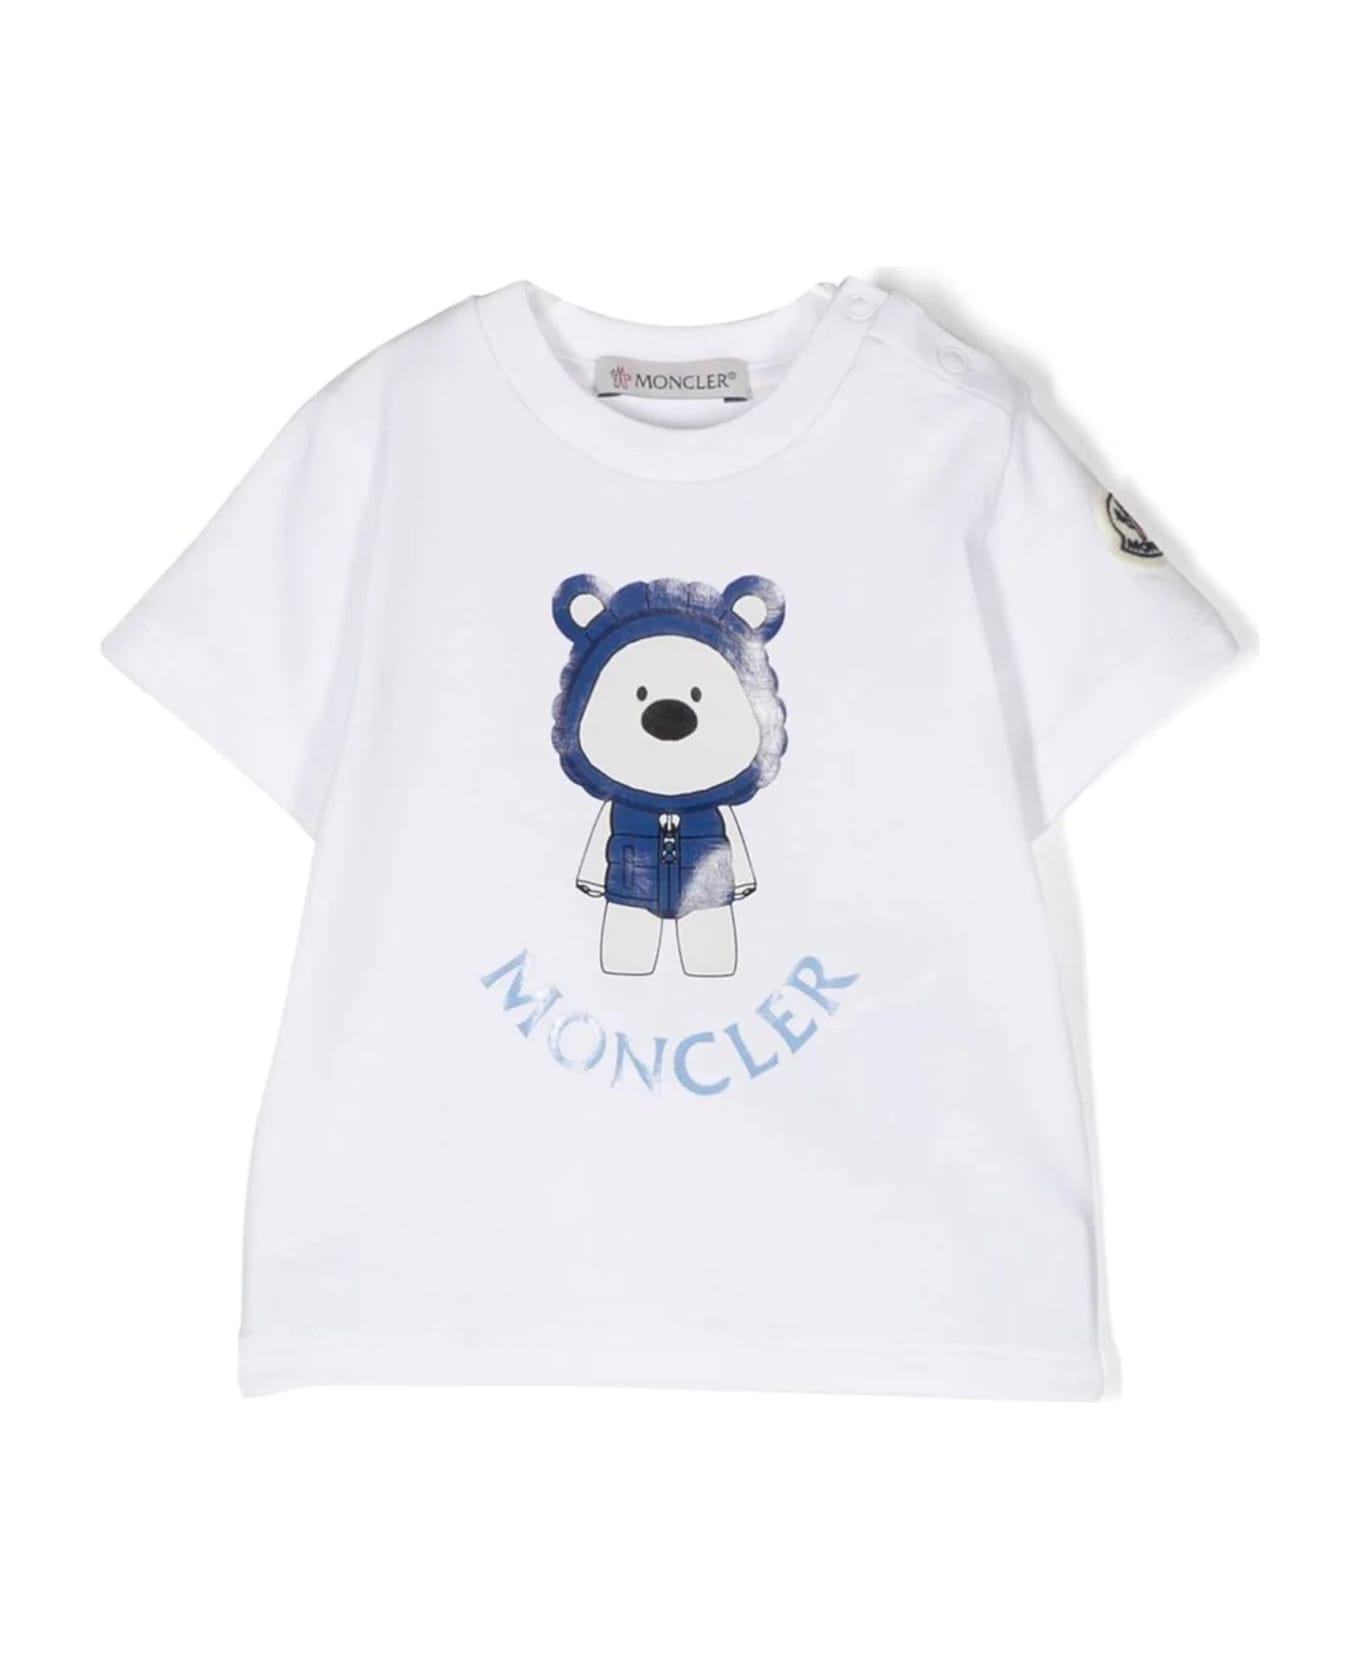 Moncler White Cotton Tshirt - Bianco+blu